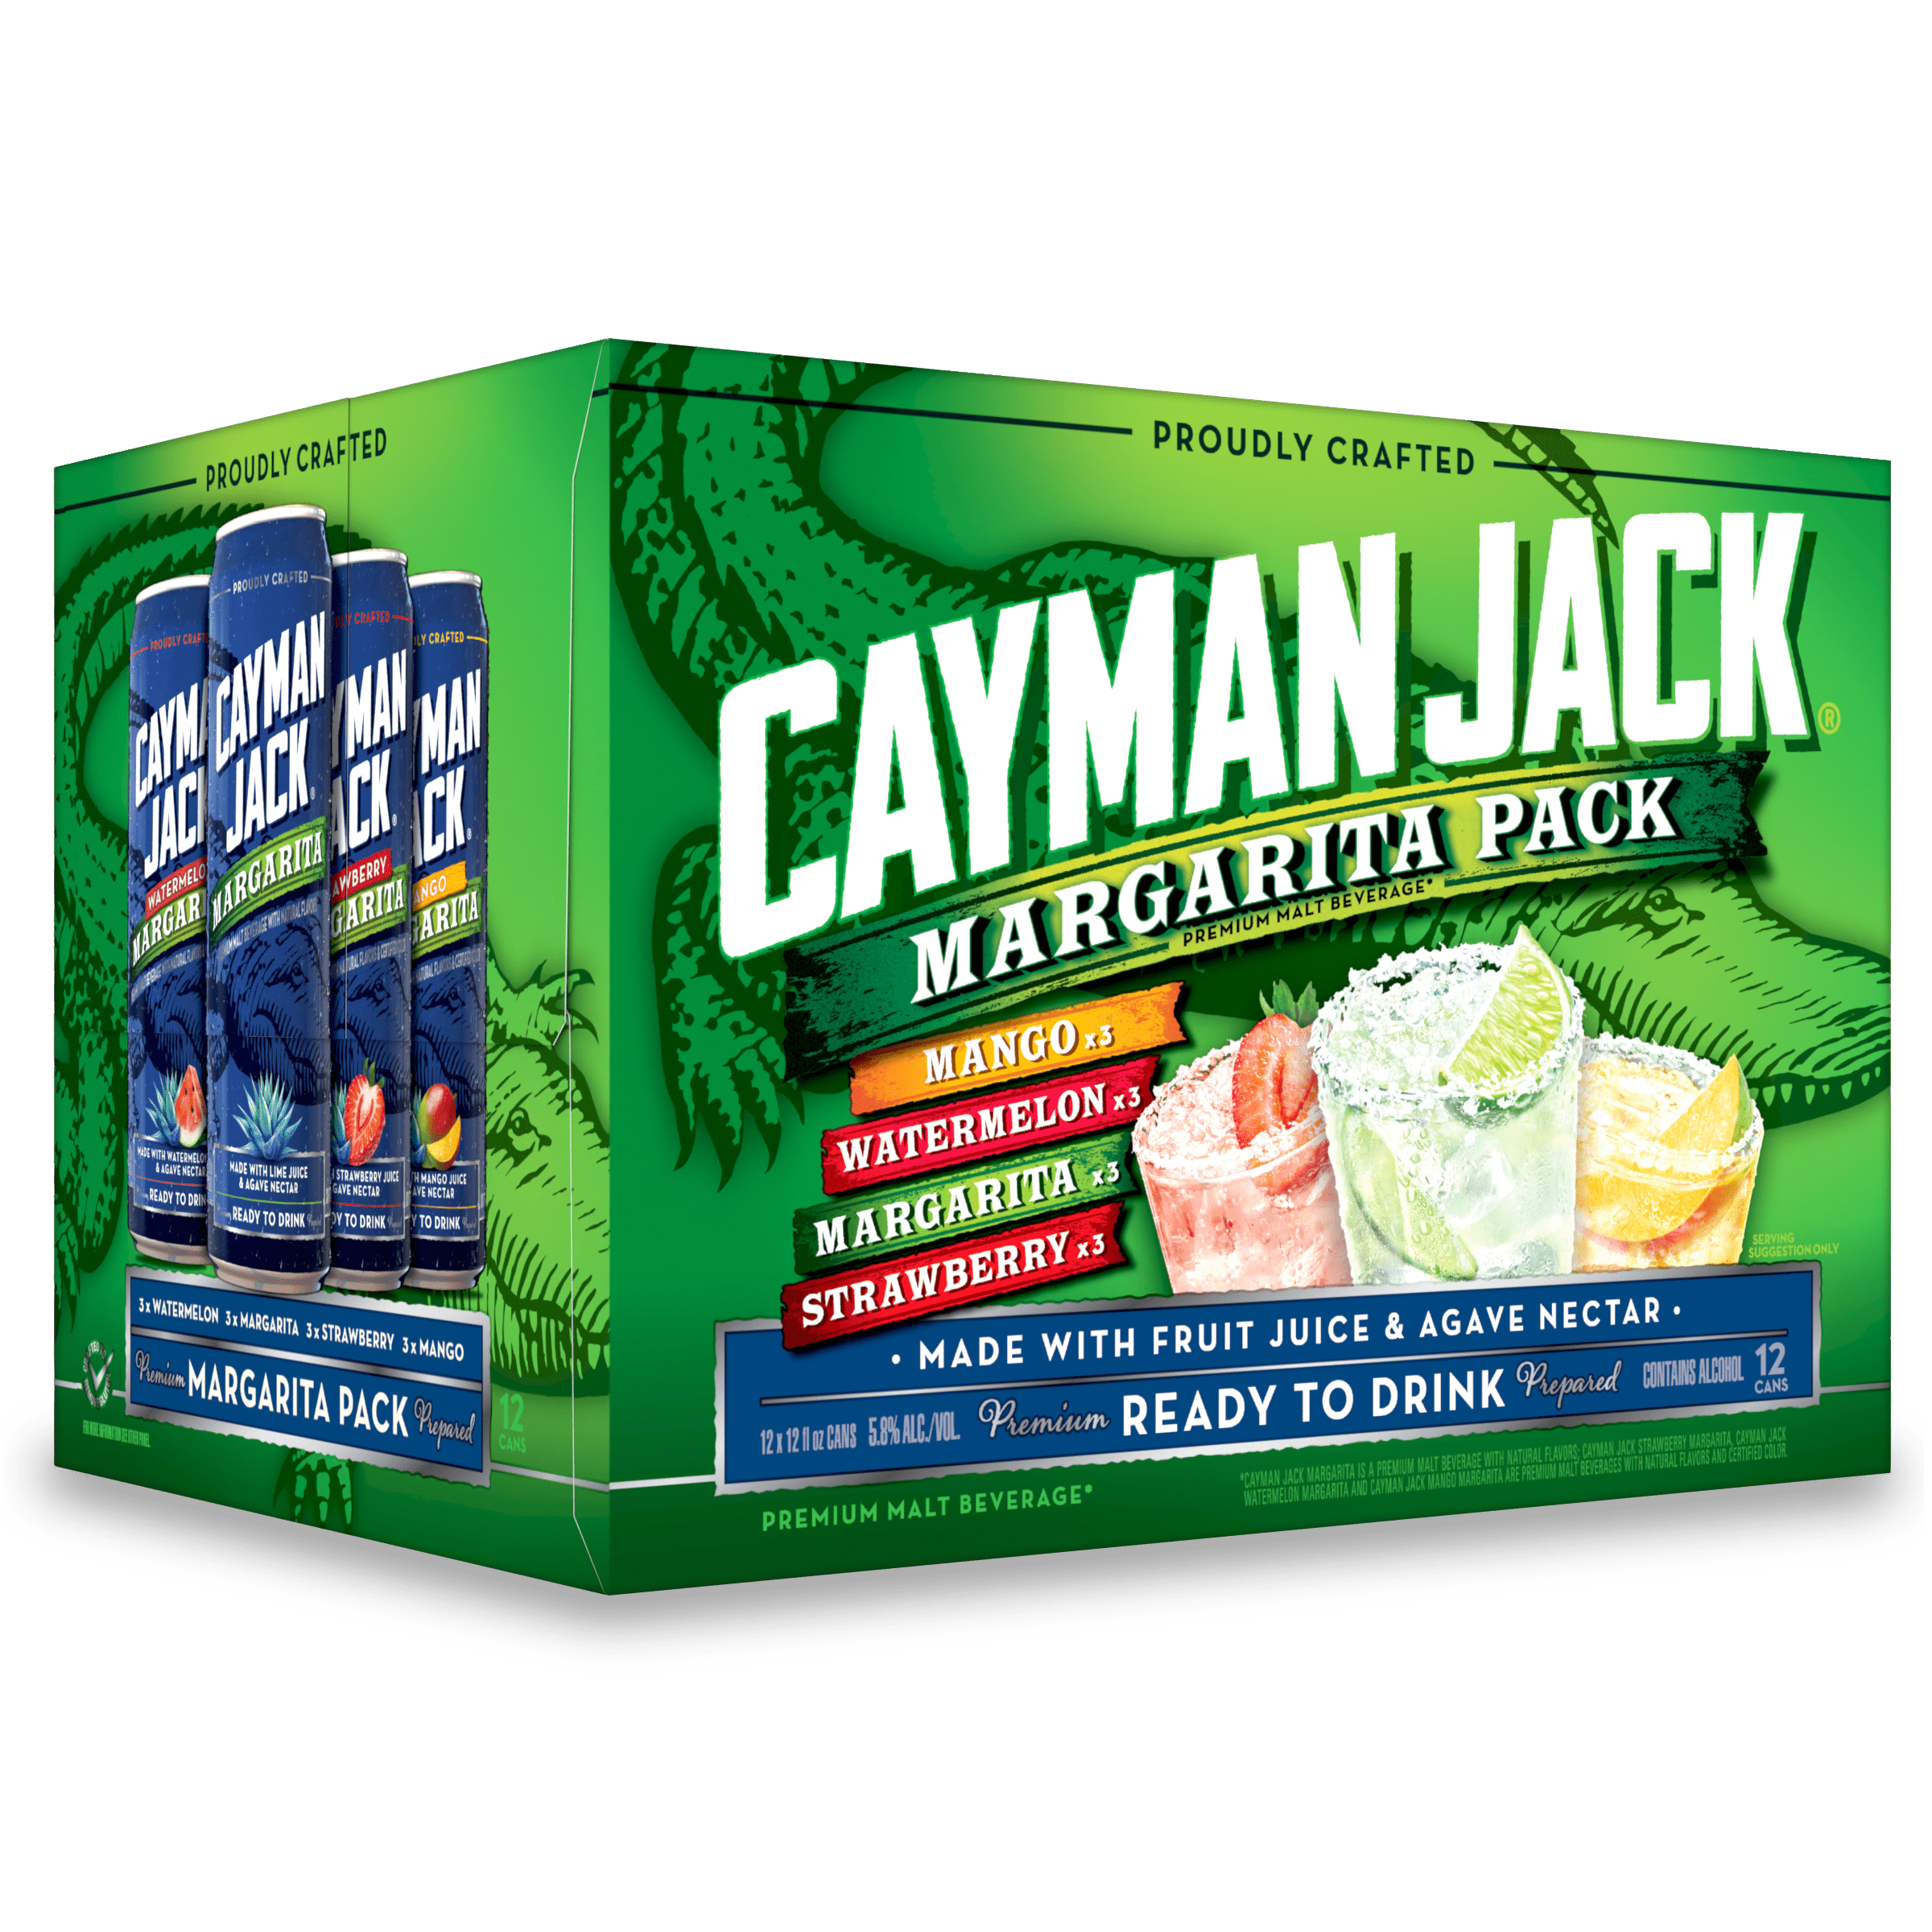 cayman-jack-margarita-nutritional-facts-calories-details